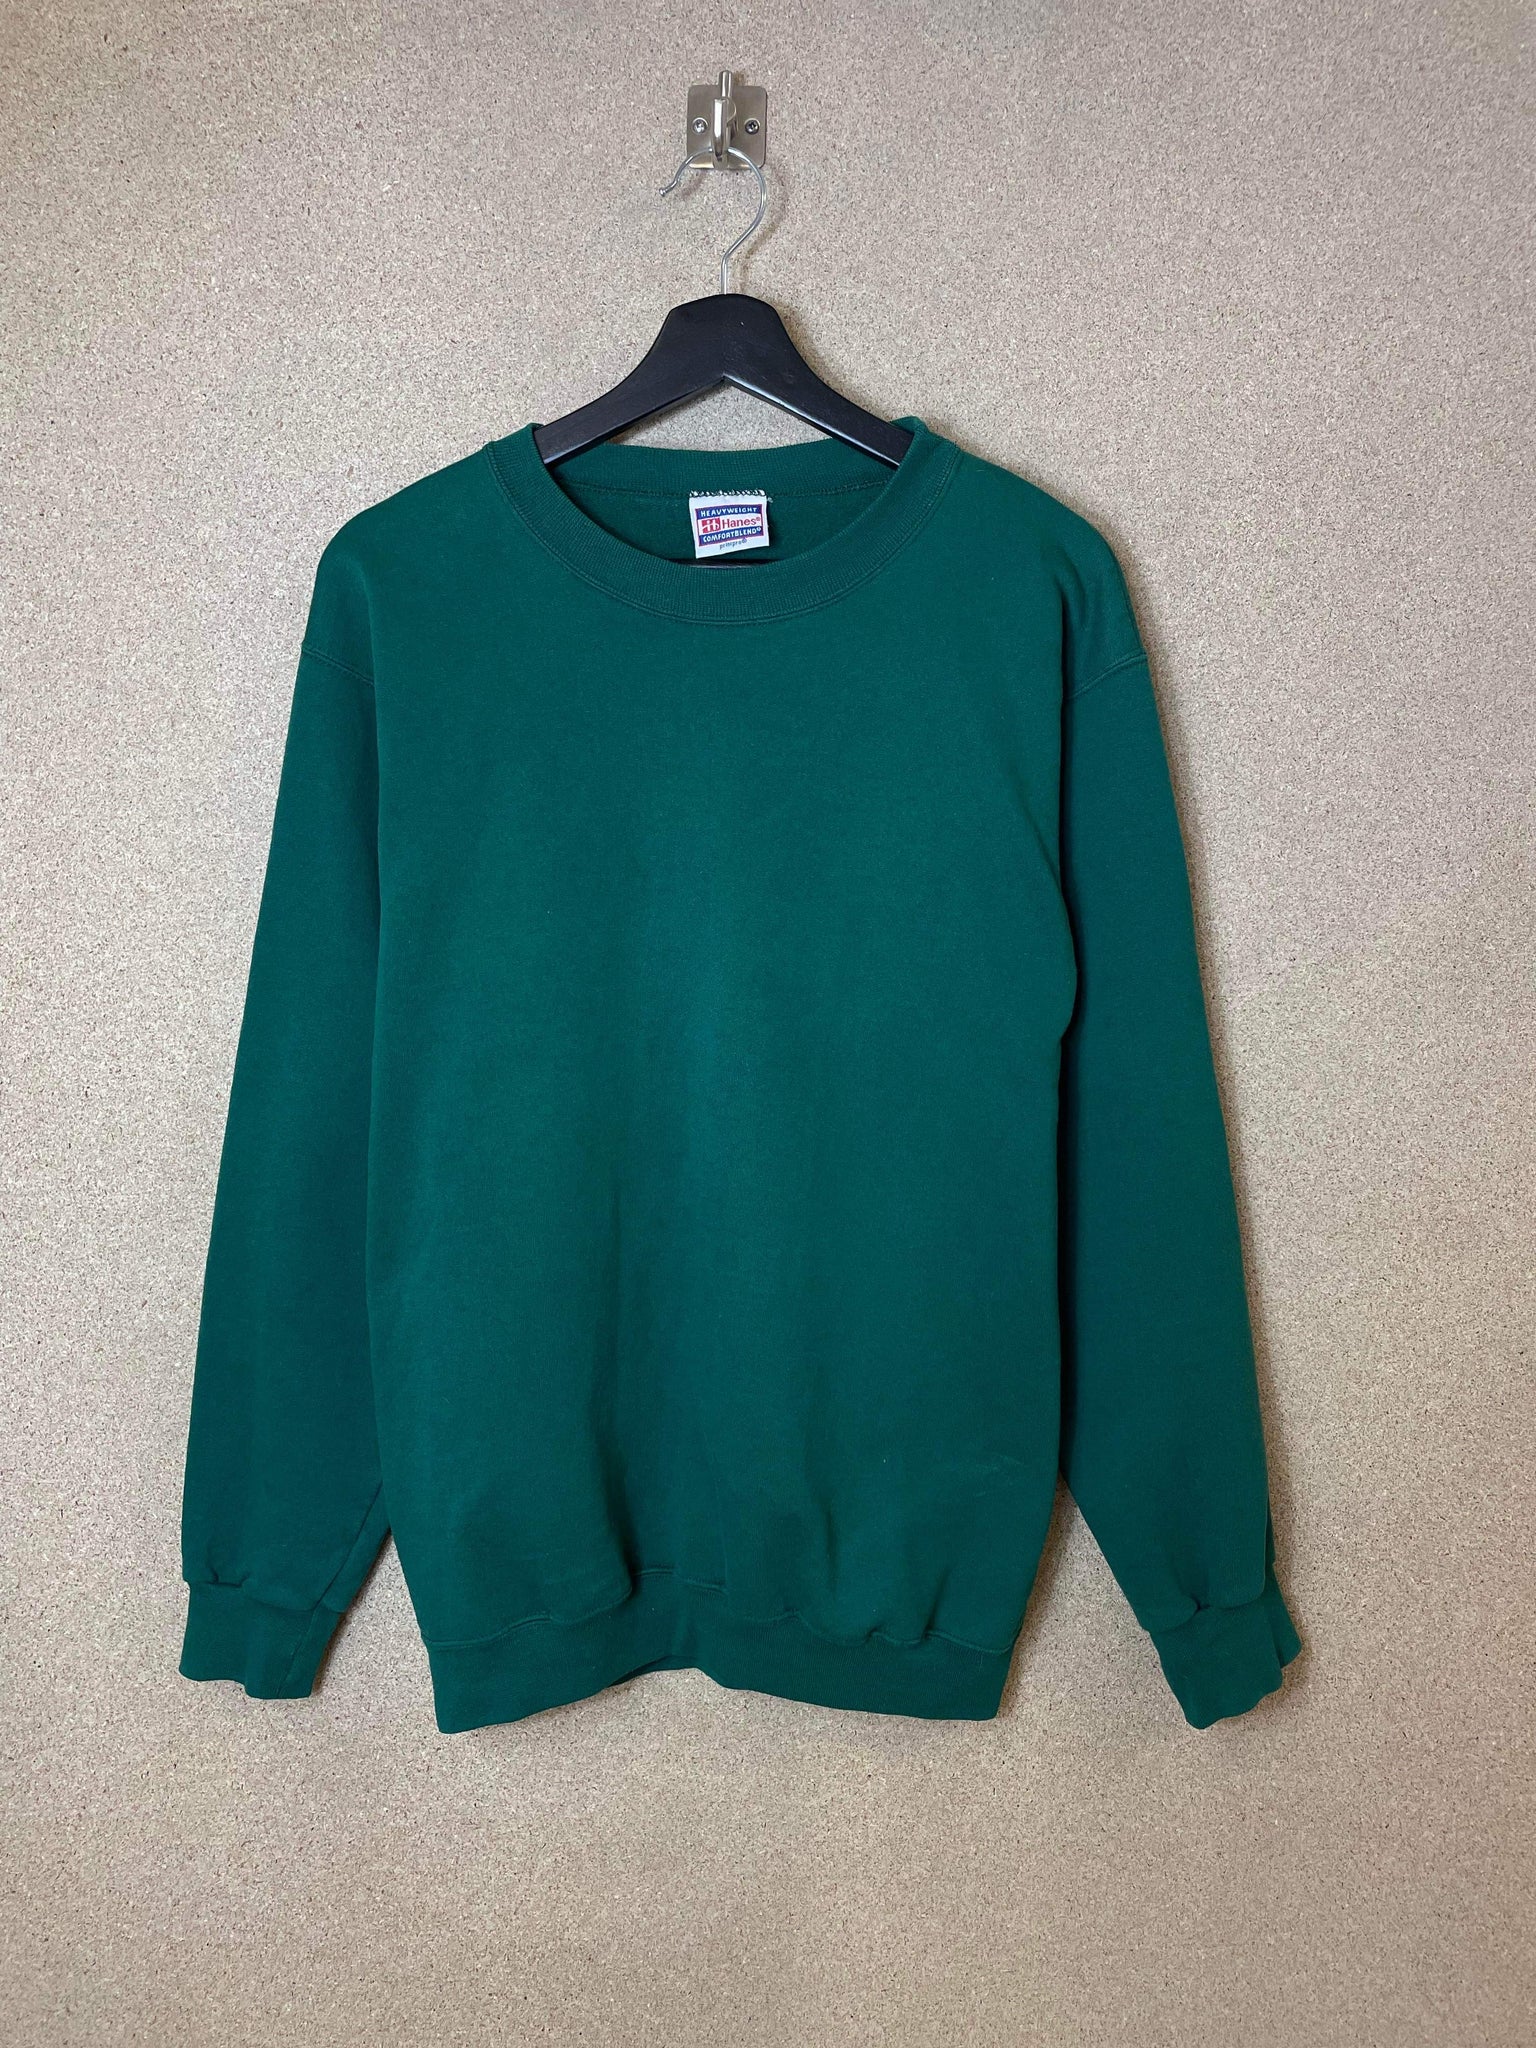 Vintage Hanes 90s Forest Green Sweatshirt - S